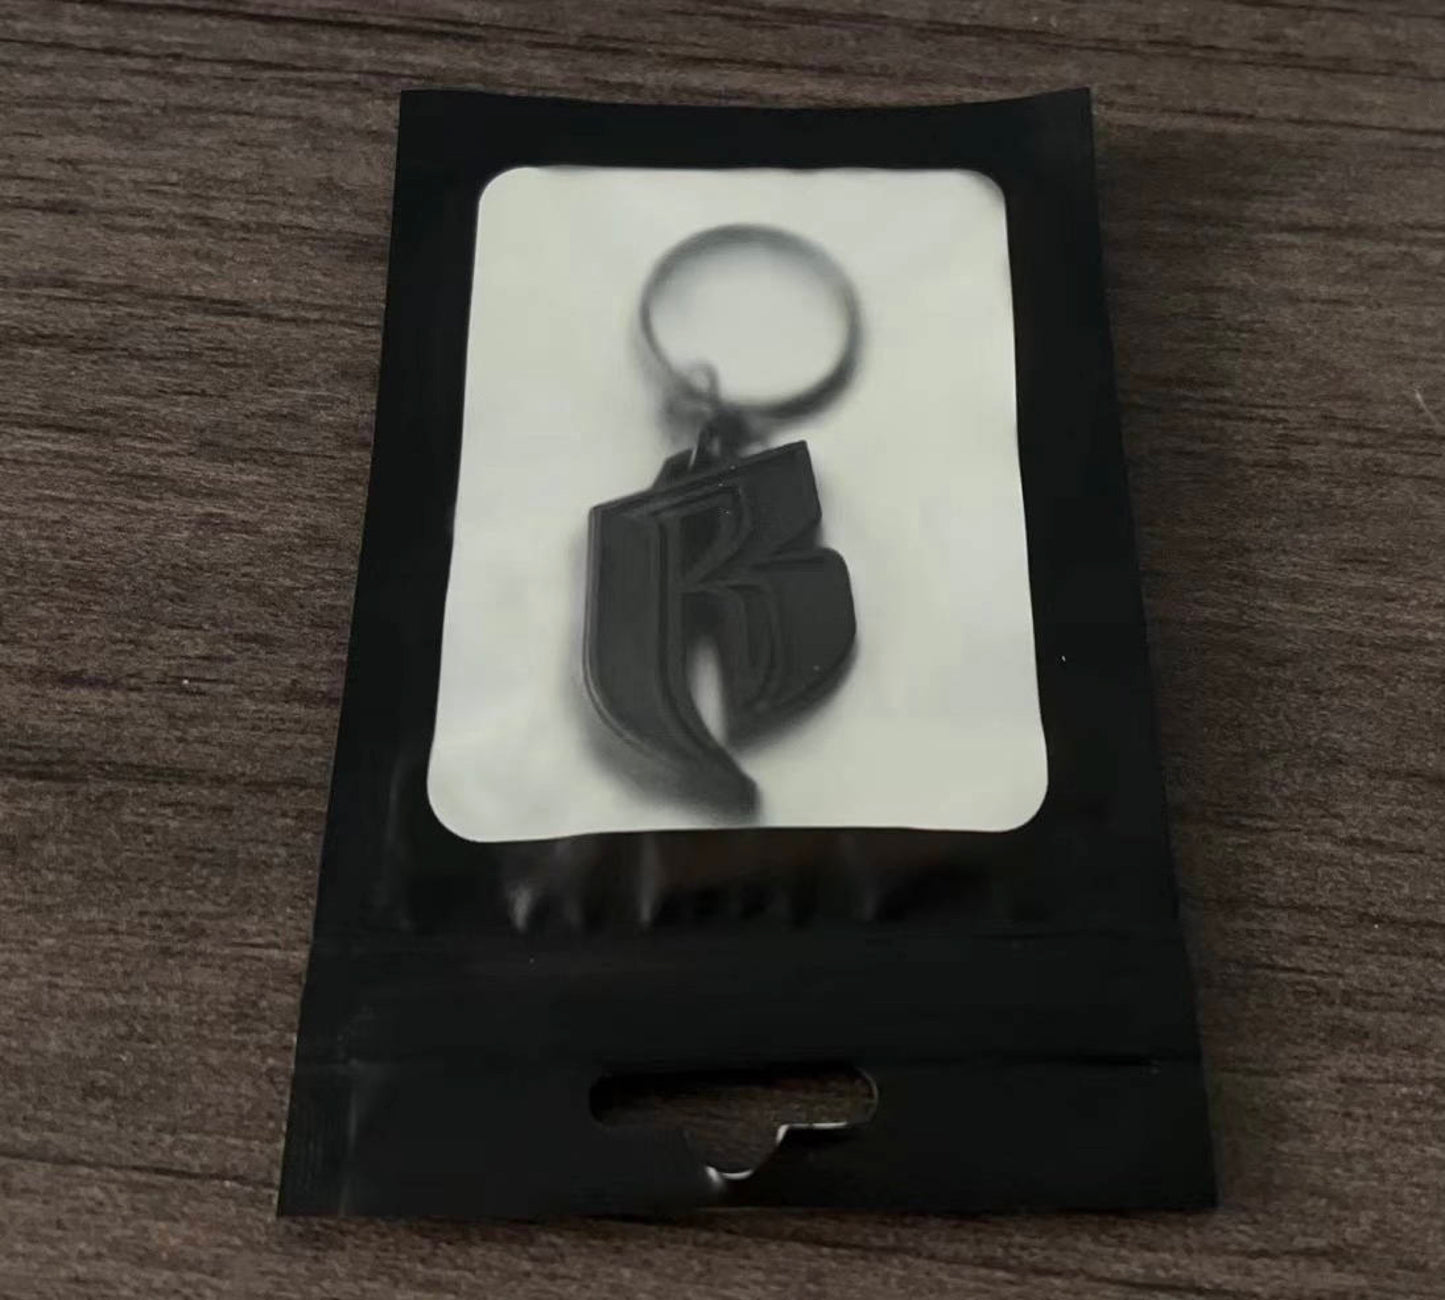 BLKRR Rubber Keychain